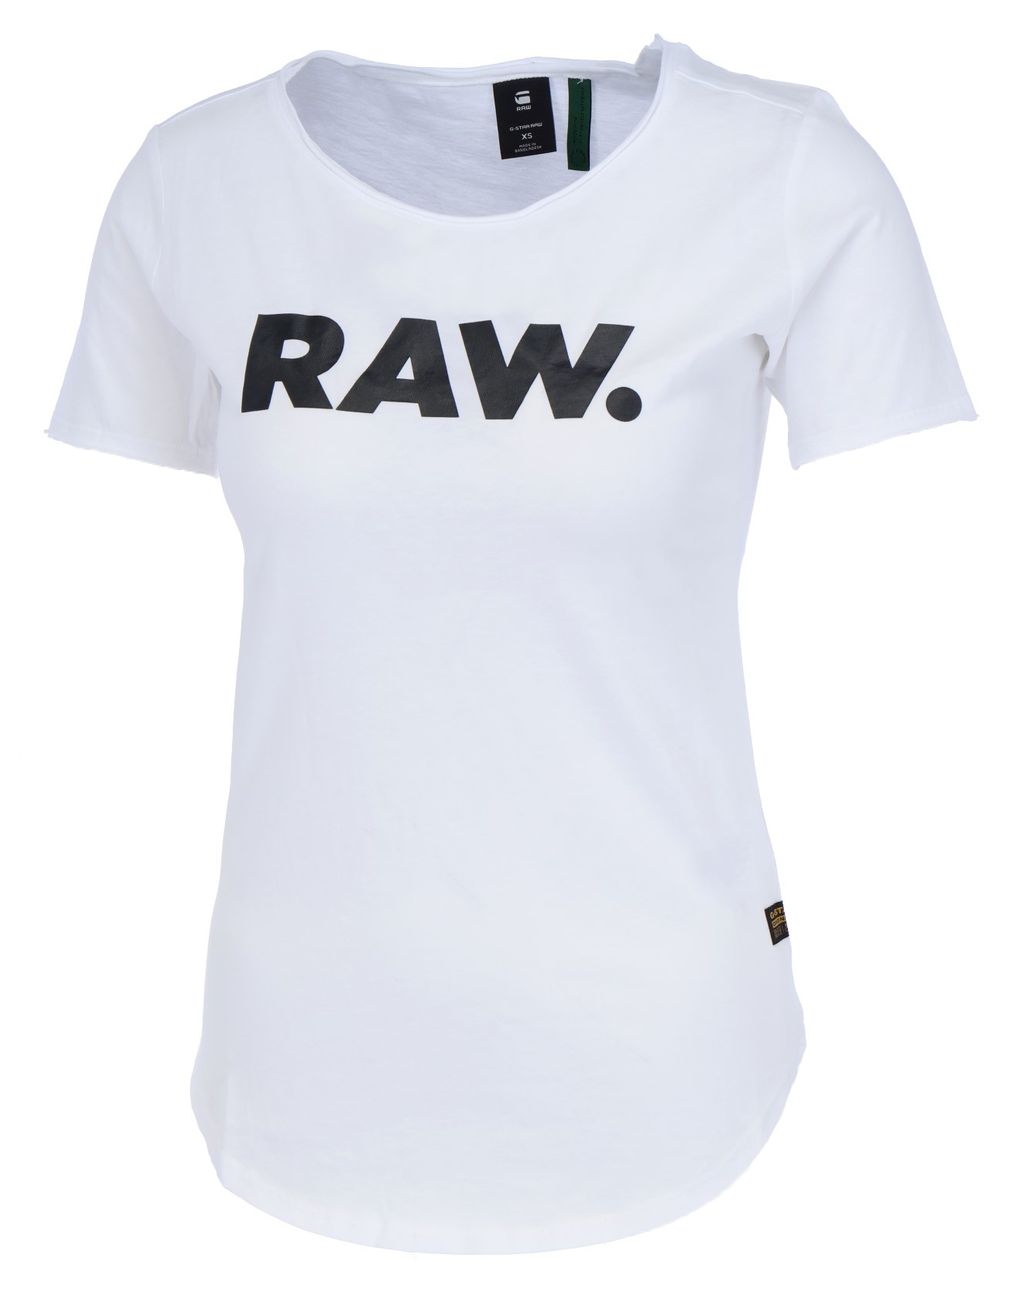 G-STAR RAW DENIM RAW SLIM GRAPHIC R T Damen T-Shirt - G-Star Raw Denim - SAGATOO -